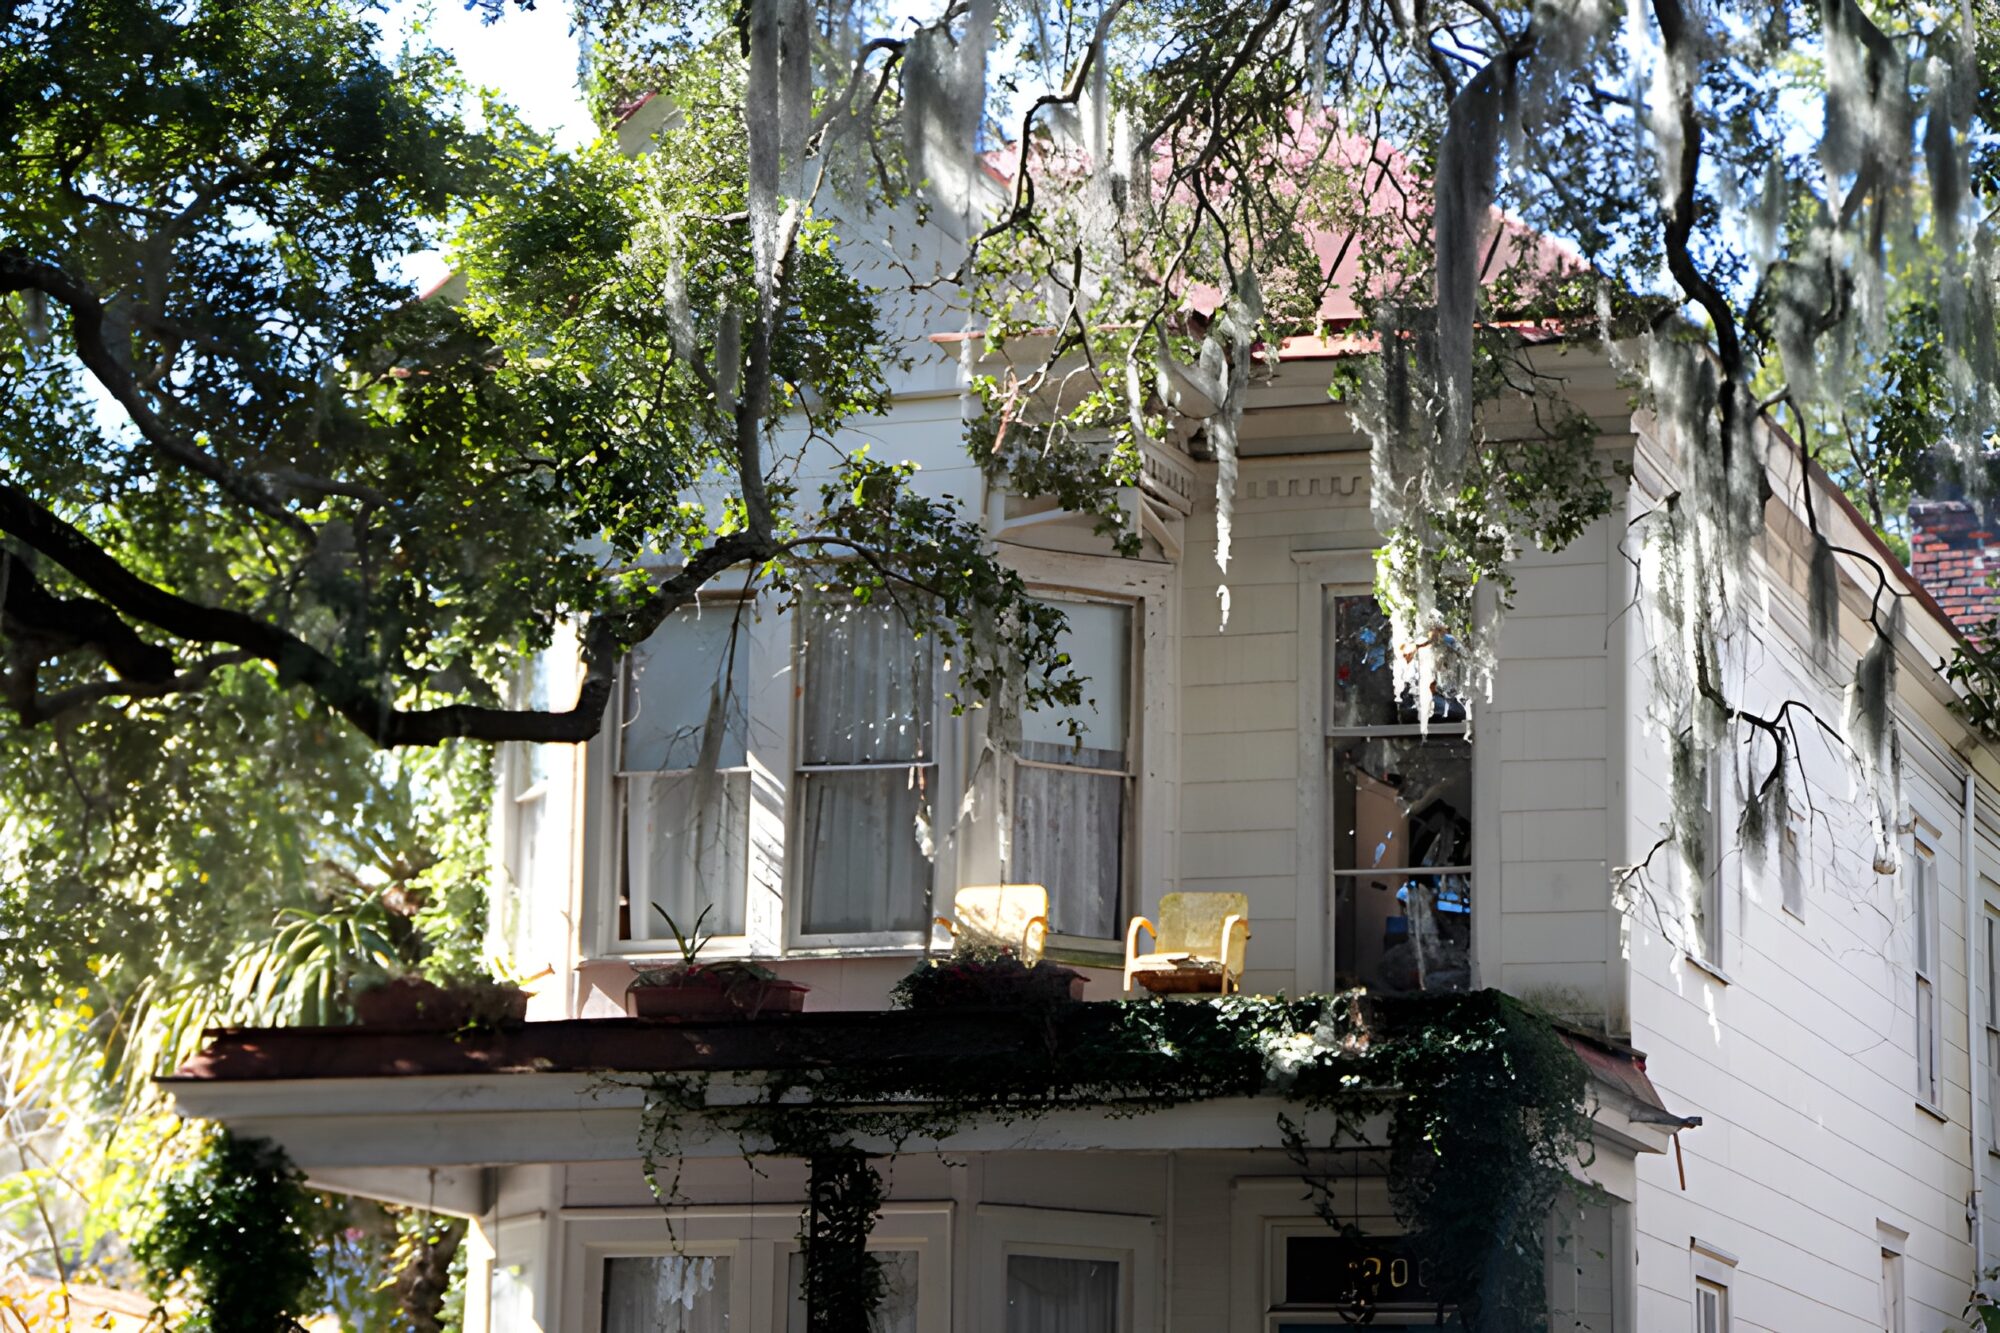 House on Savannah Street